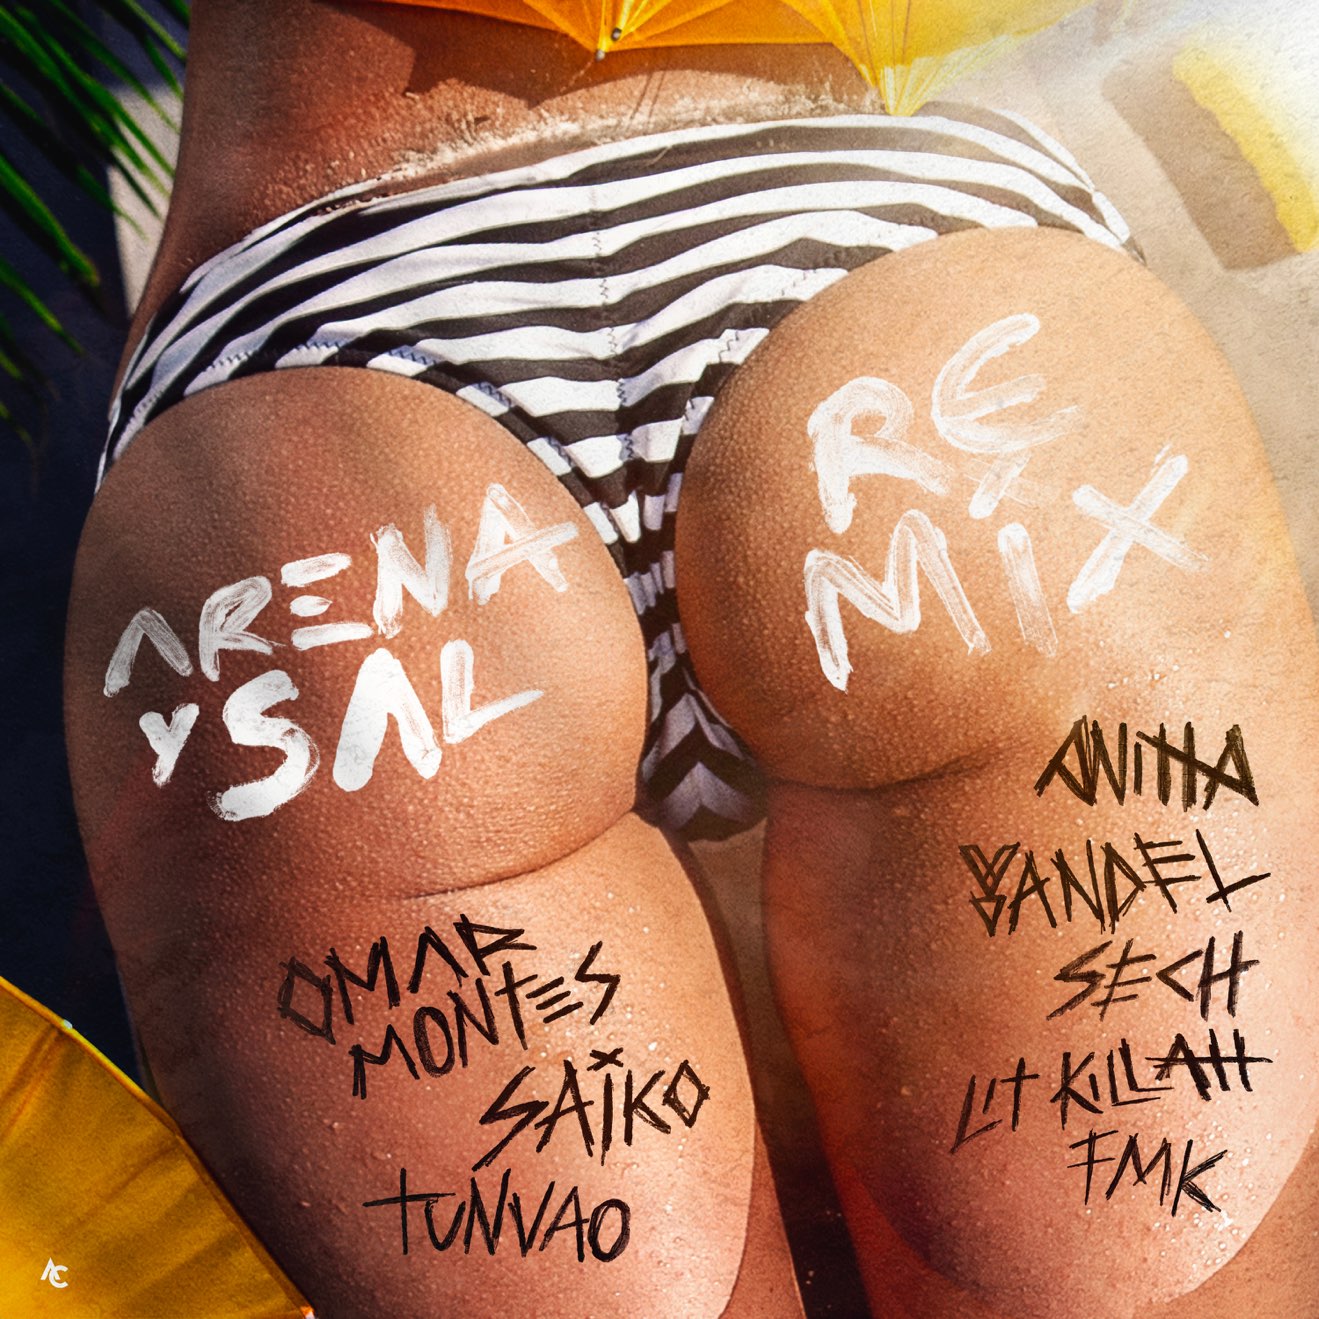 Omar Montes, Anitta & Sech – Arena y Sal (Remix) [feat. Yandel, Saiko, FMK, LIT killah & Tunvao] – Single (2024) [iTunes Match M4A]